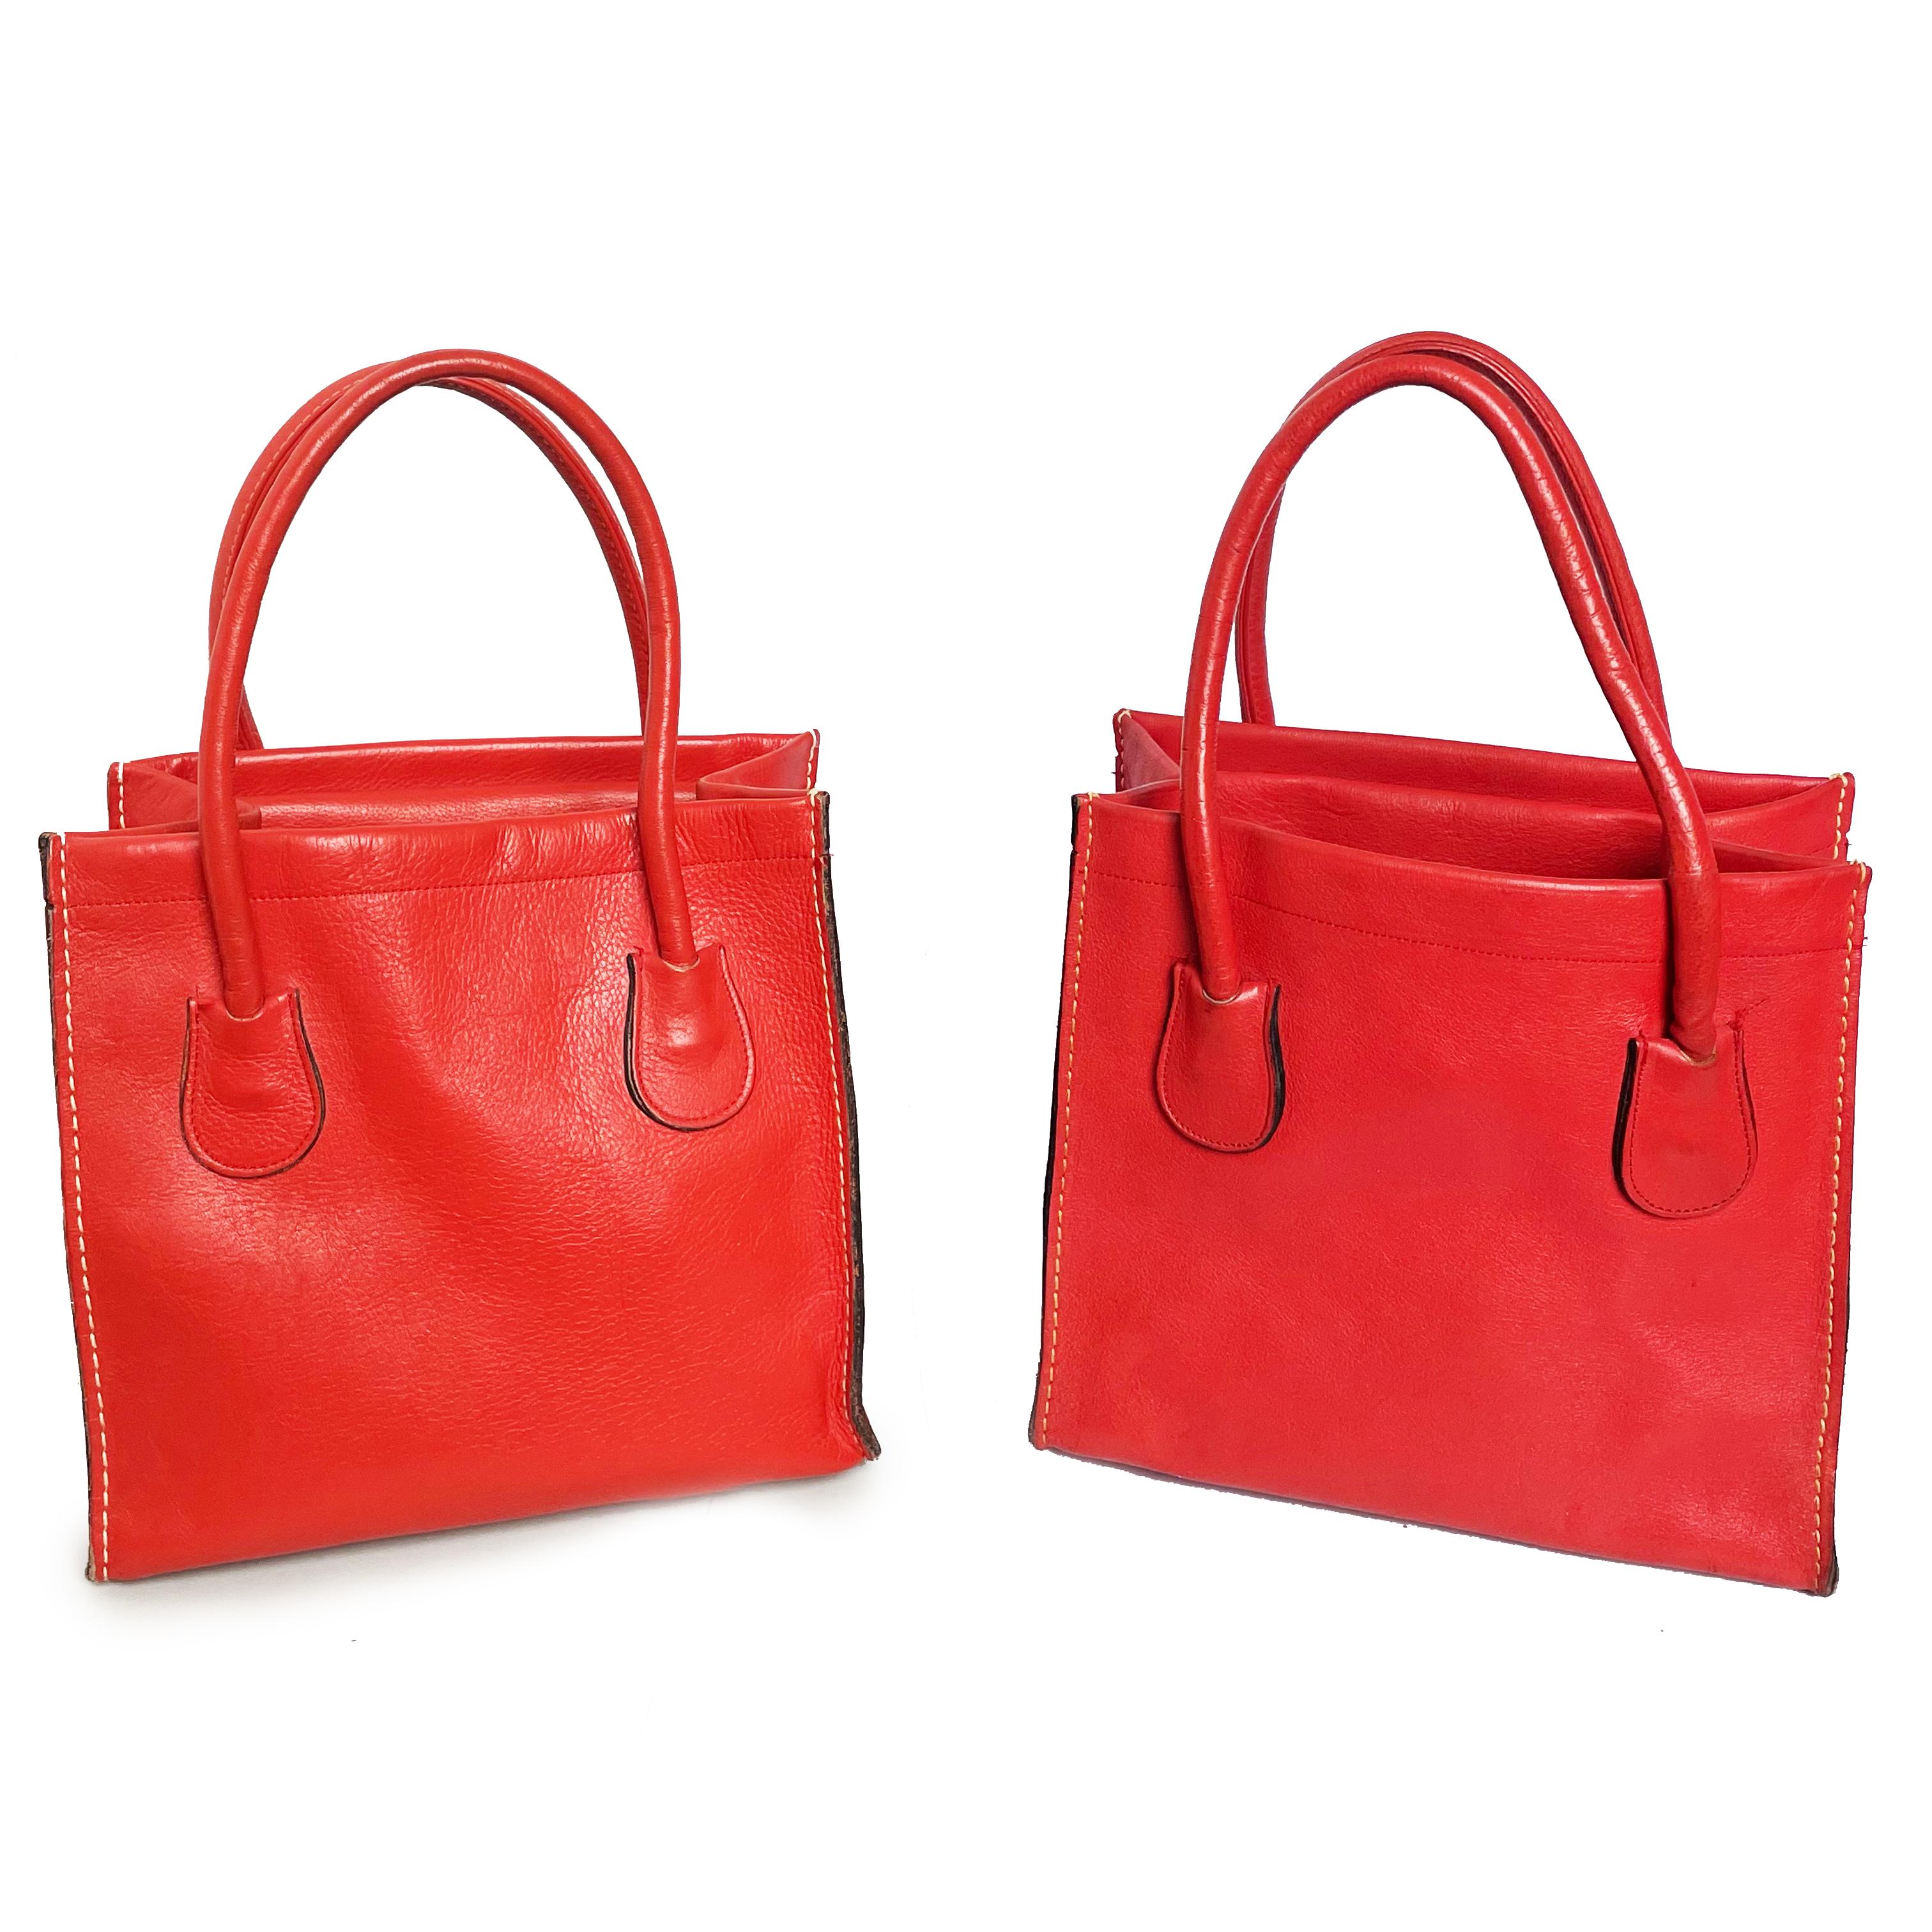 Bonnie Cashin for Coach Tote Bag Dinky Red Leather Handbag Vintage 1960s Rare 4